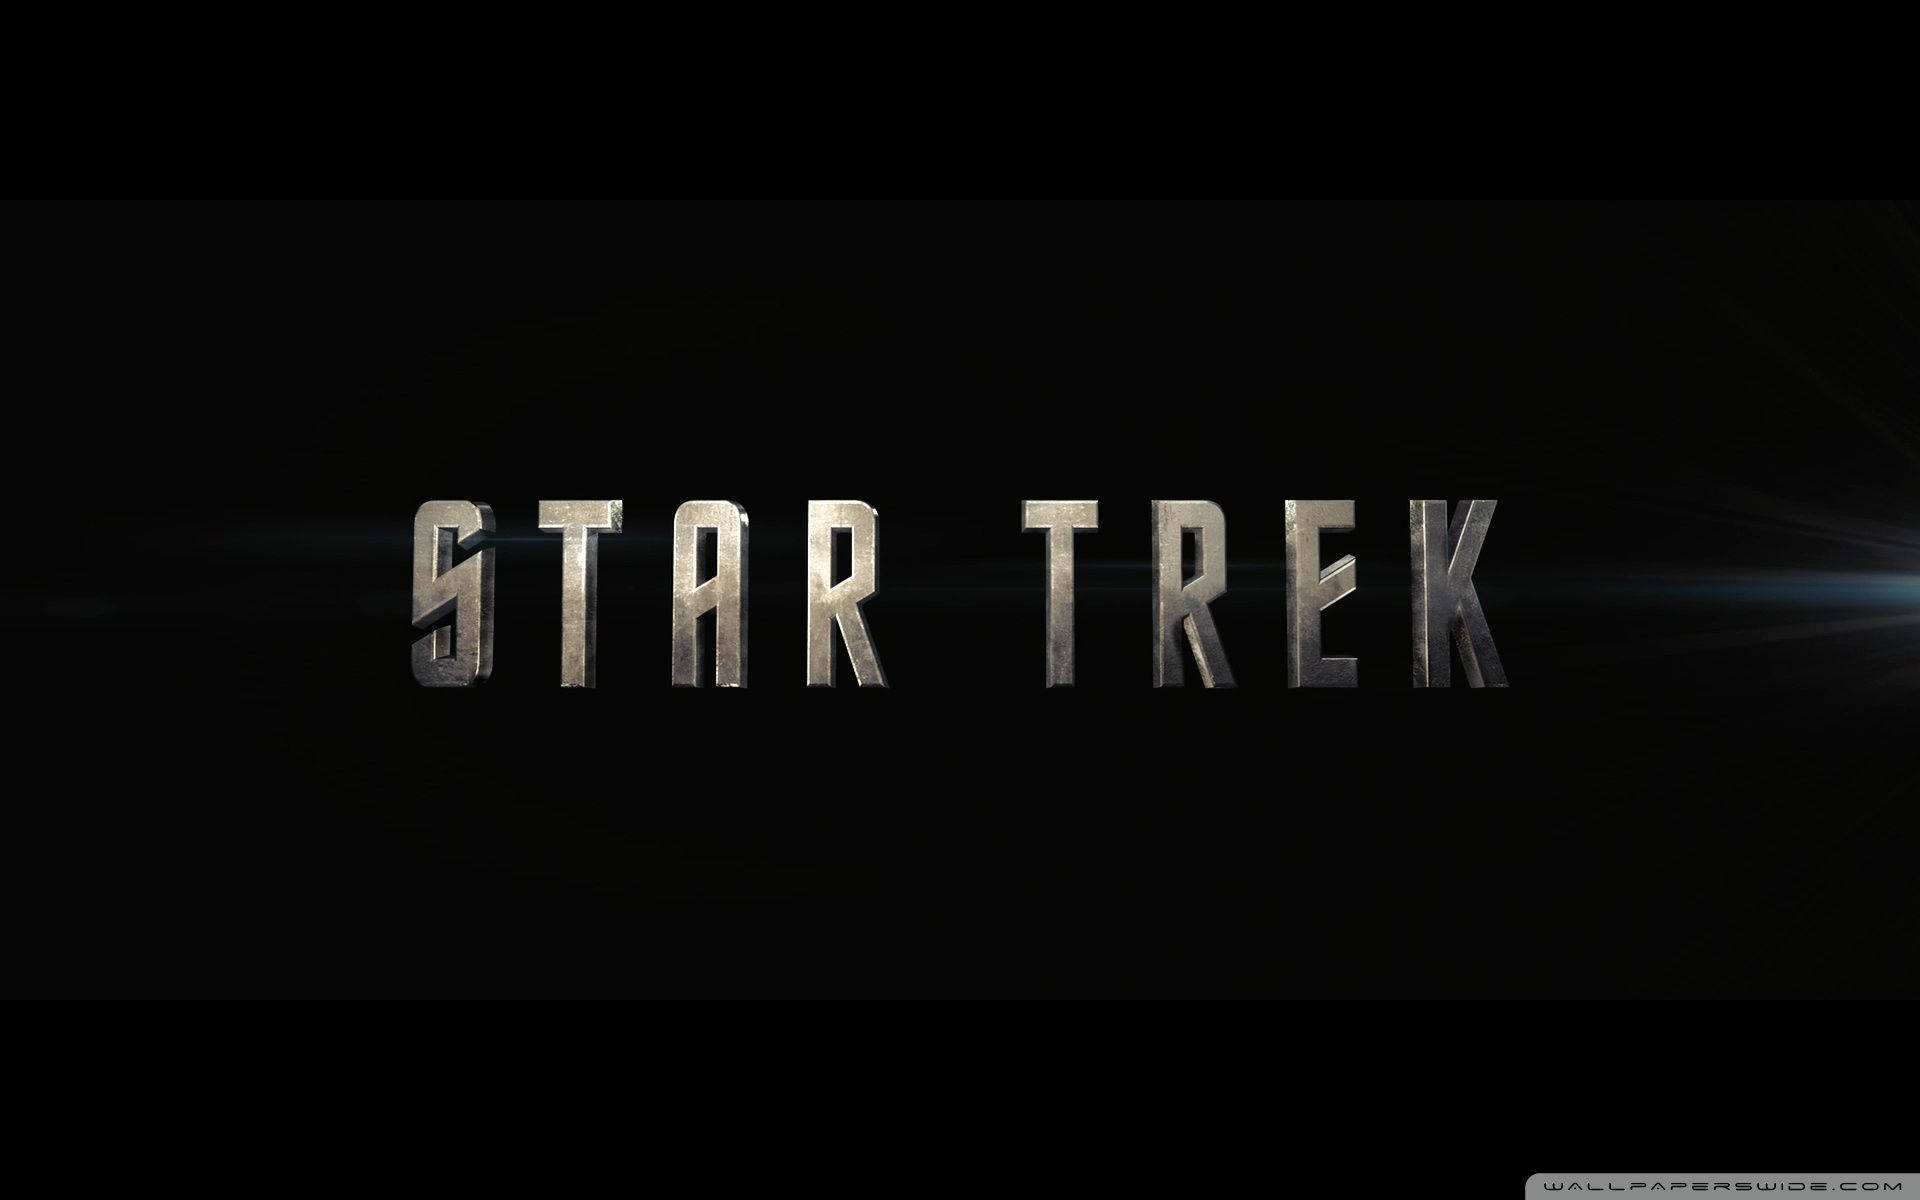 Star Trek font design with nice effects wallpaper. 